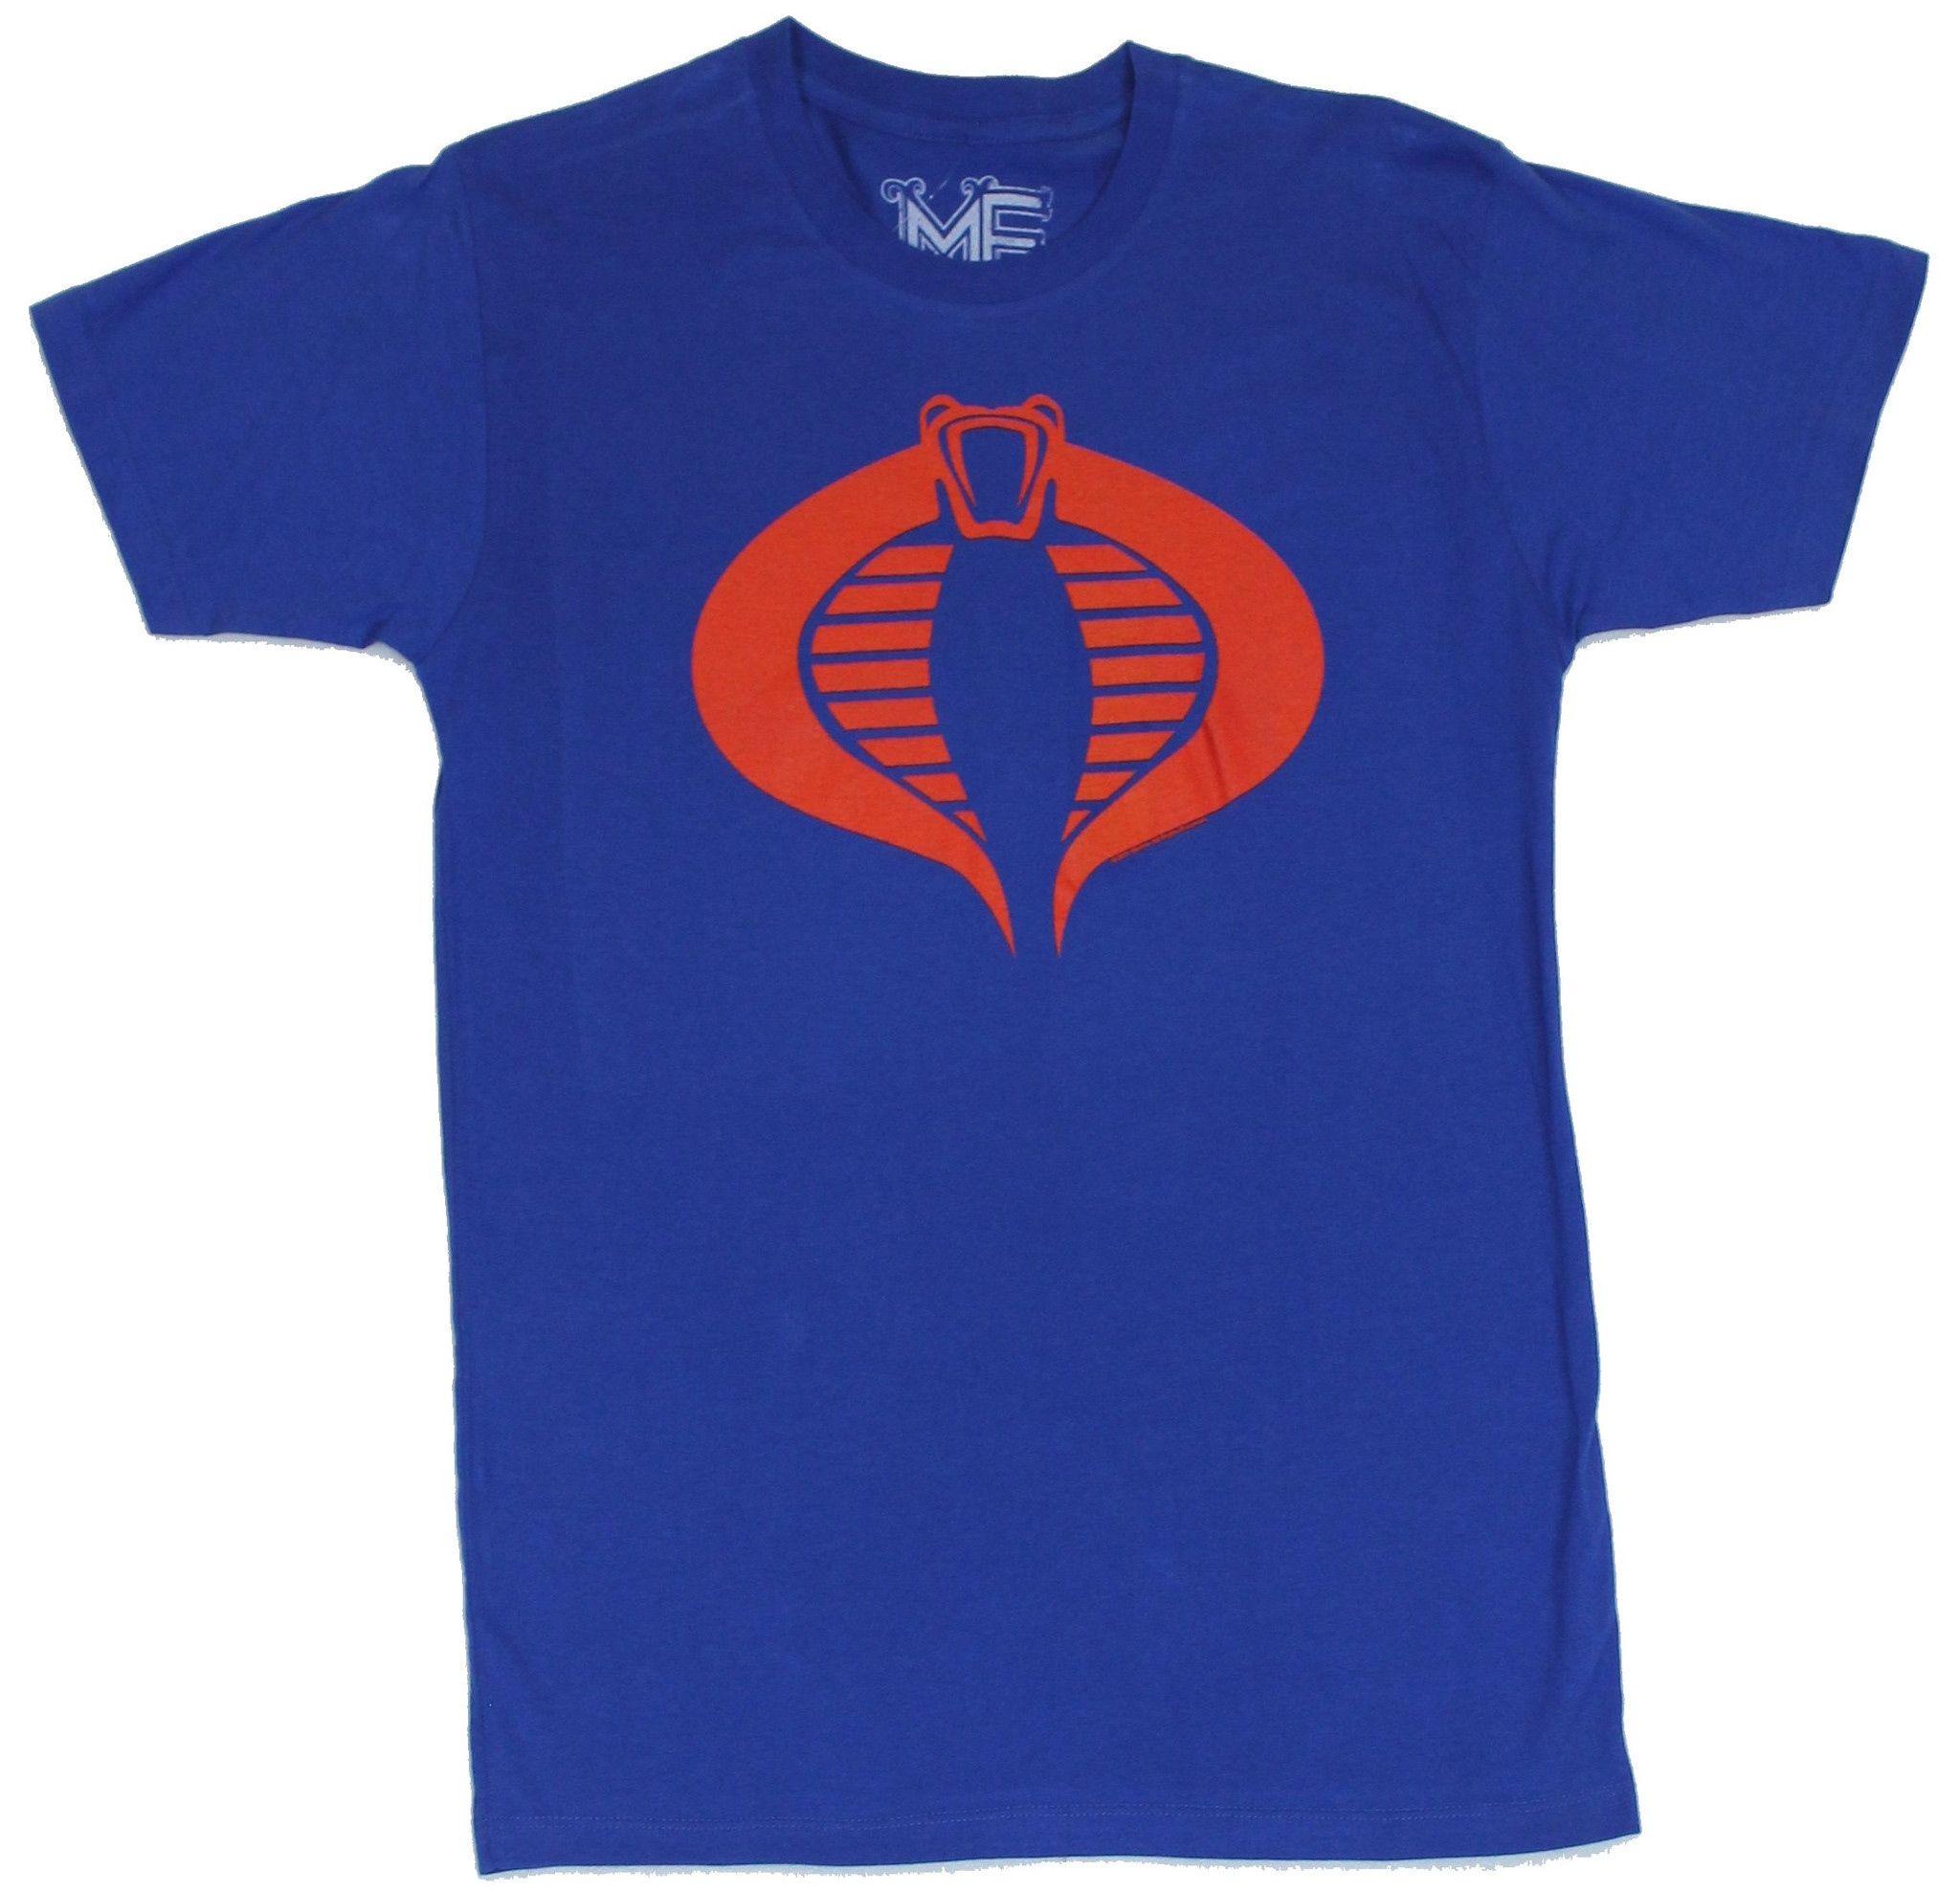 Cobra Commander Logo - GI Joe (G.I. Joe) Mens T-Shirt - Classic Cobra Commander Logo on ...